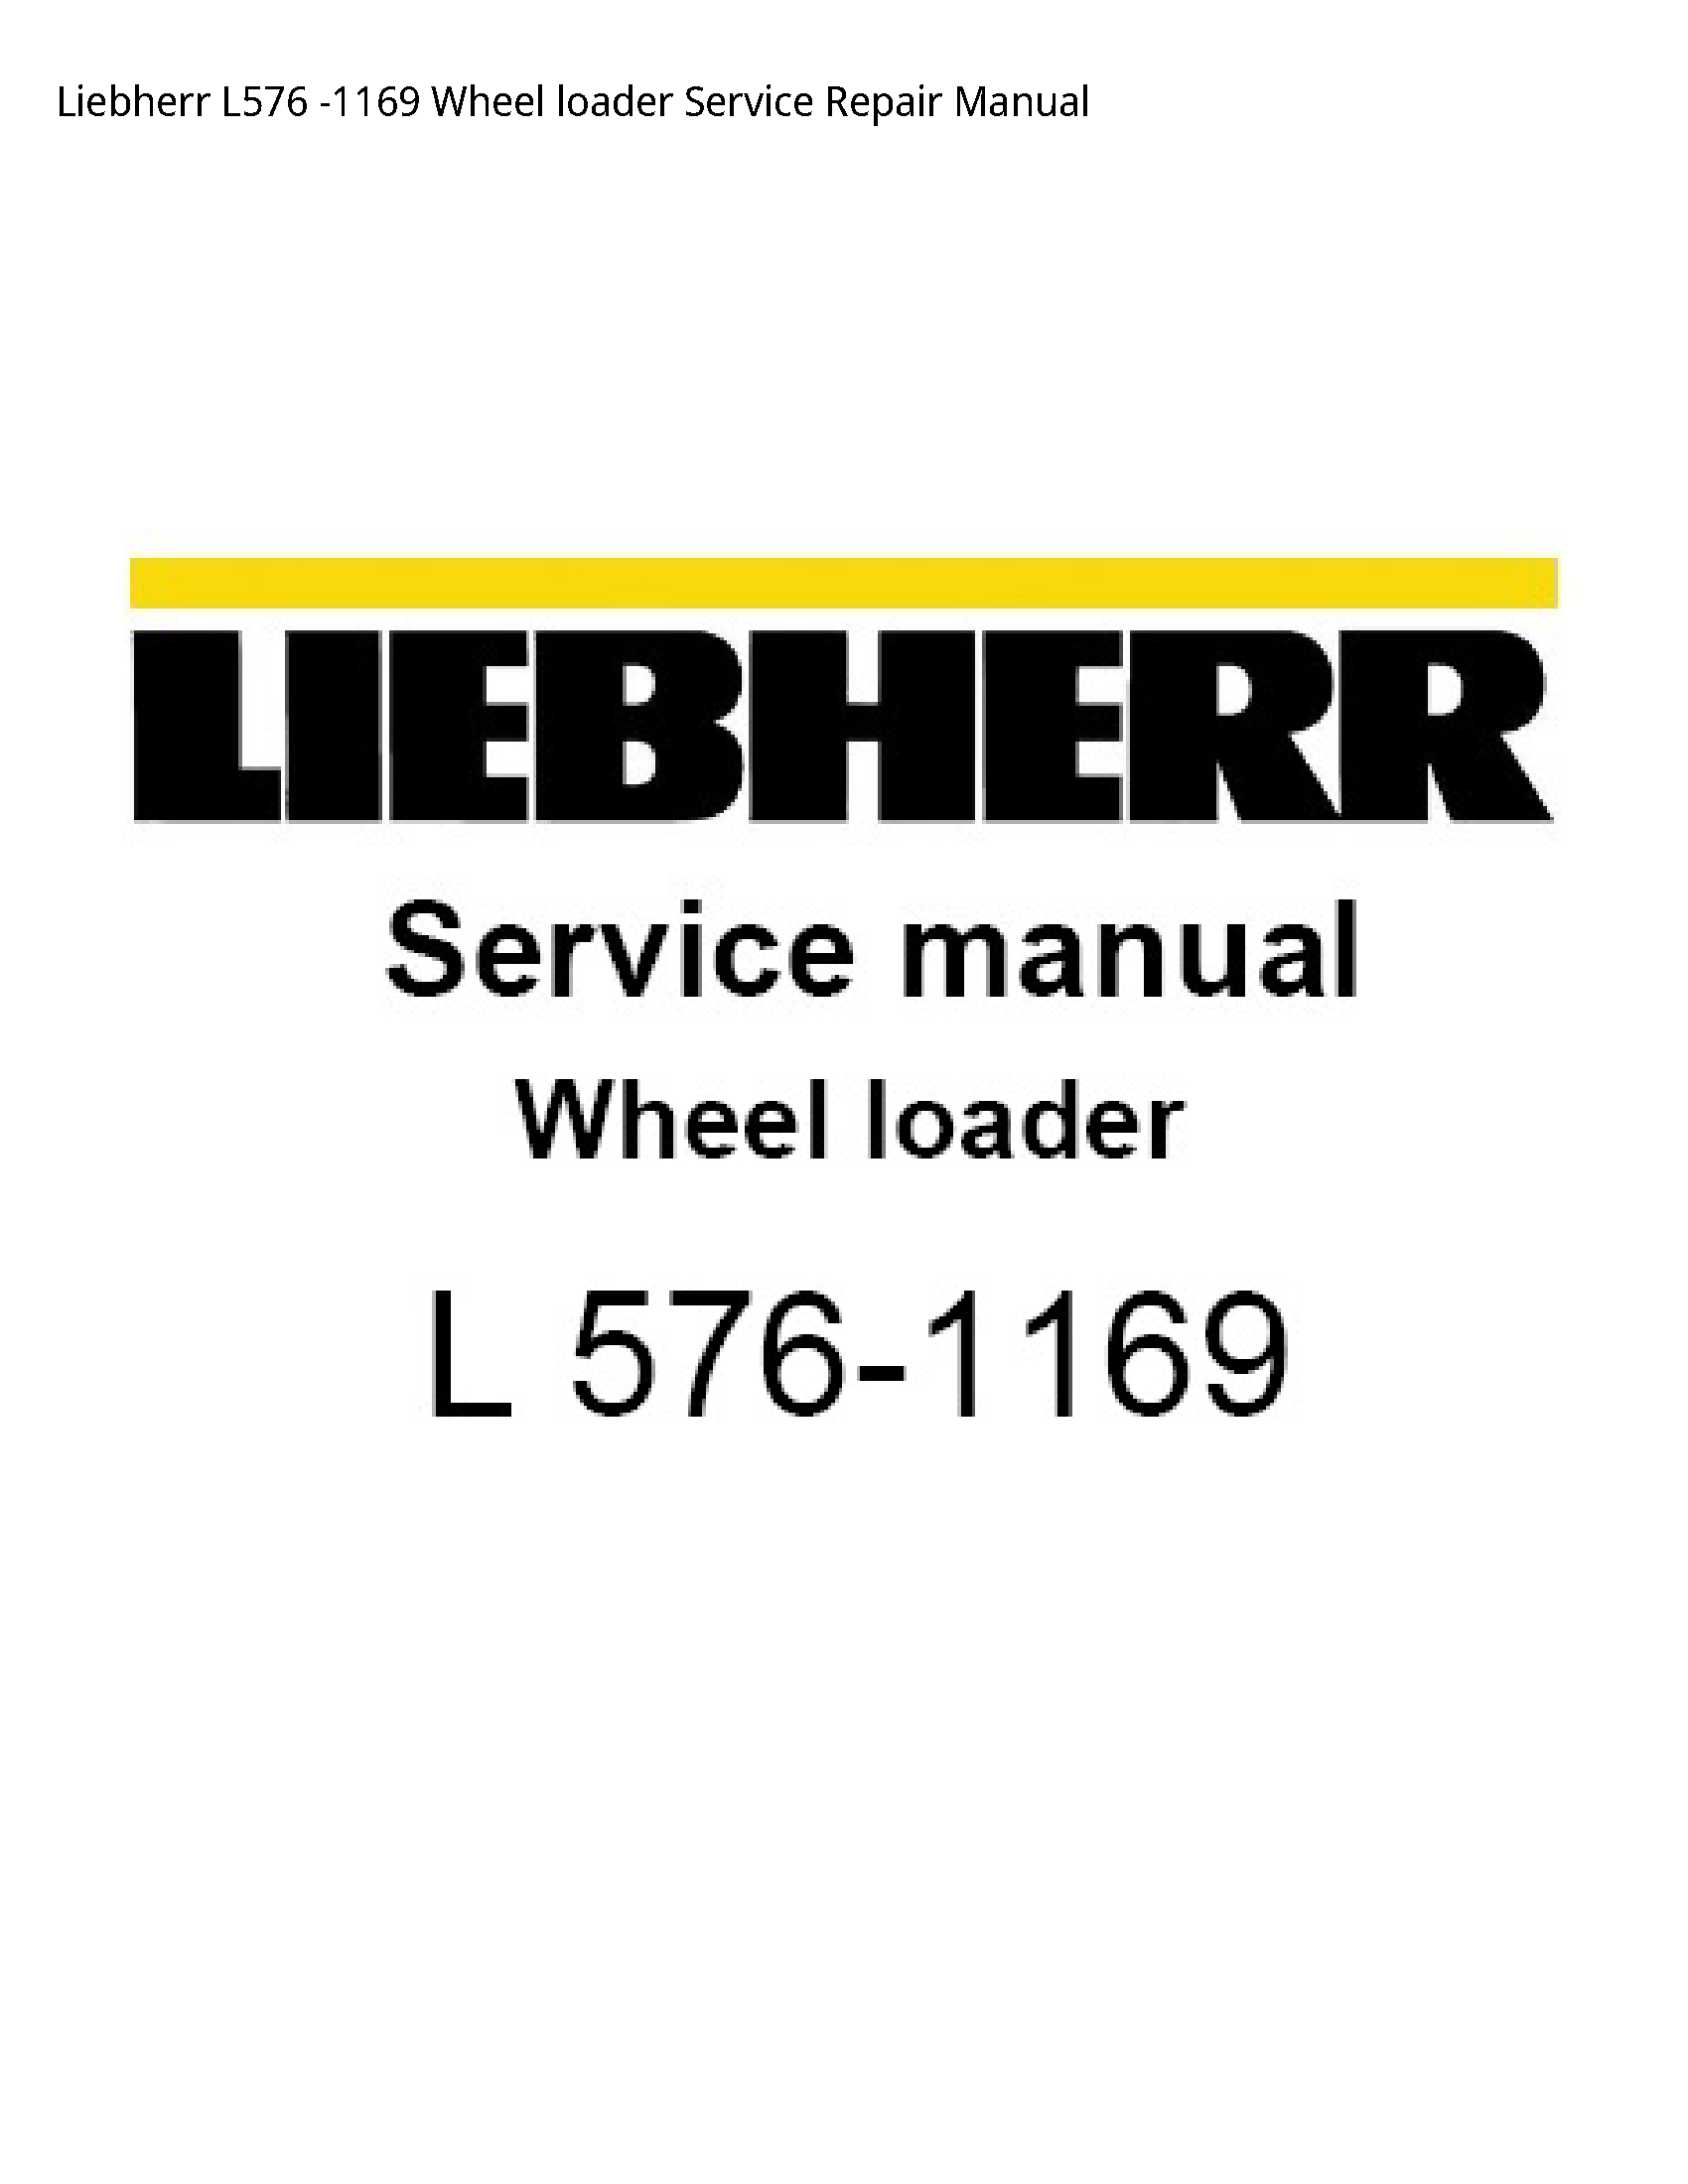 Liebherr L576 Wheel loader manual